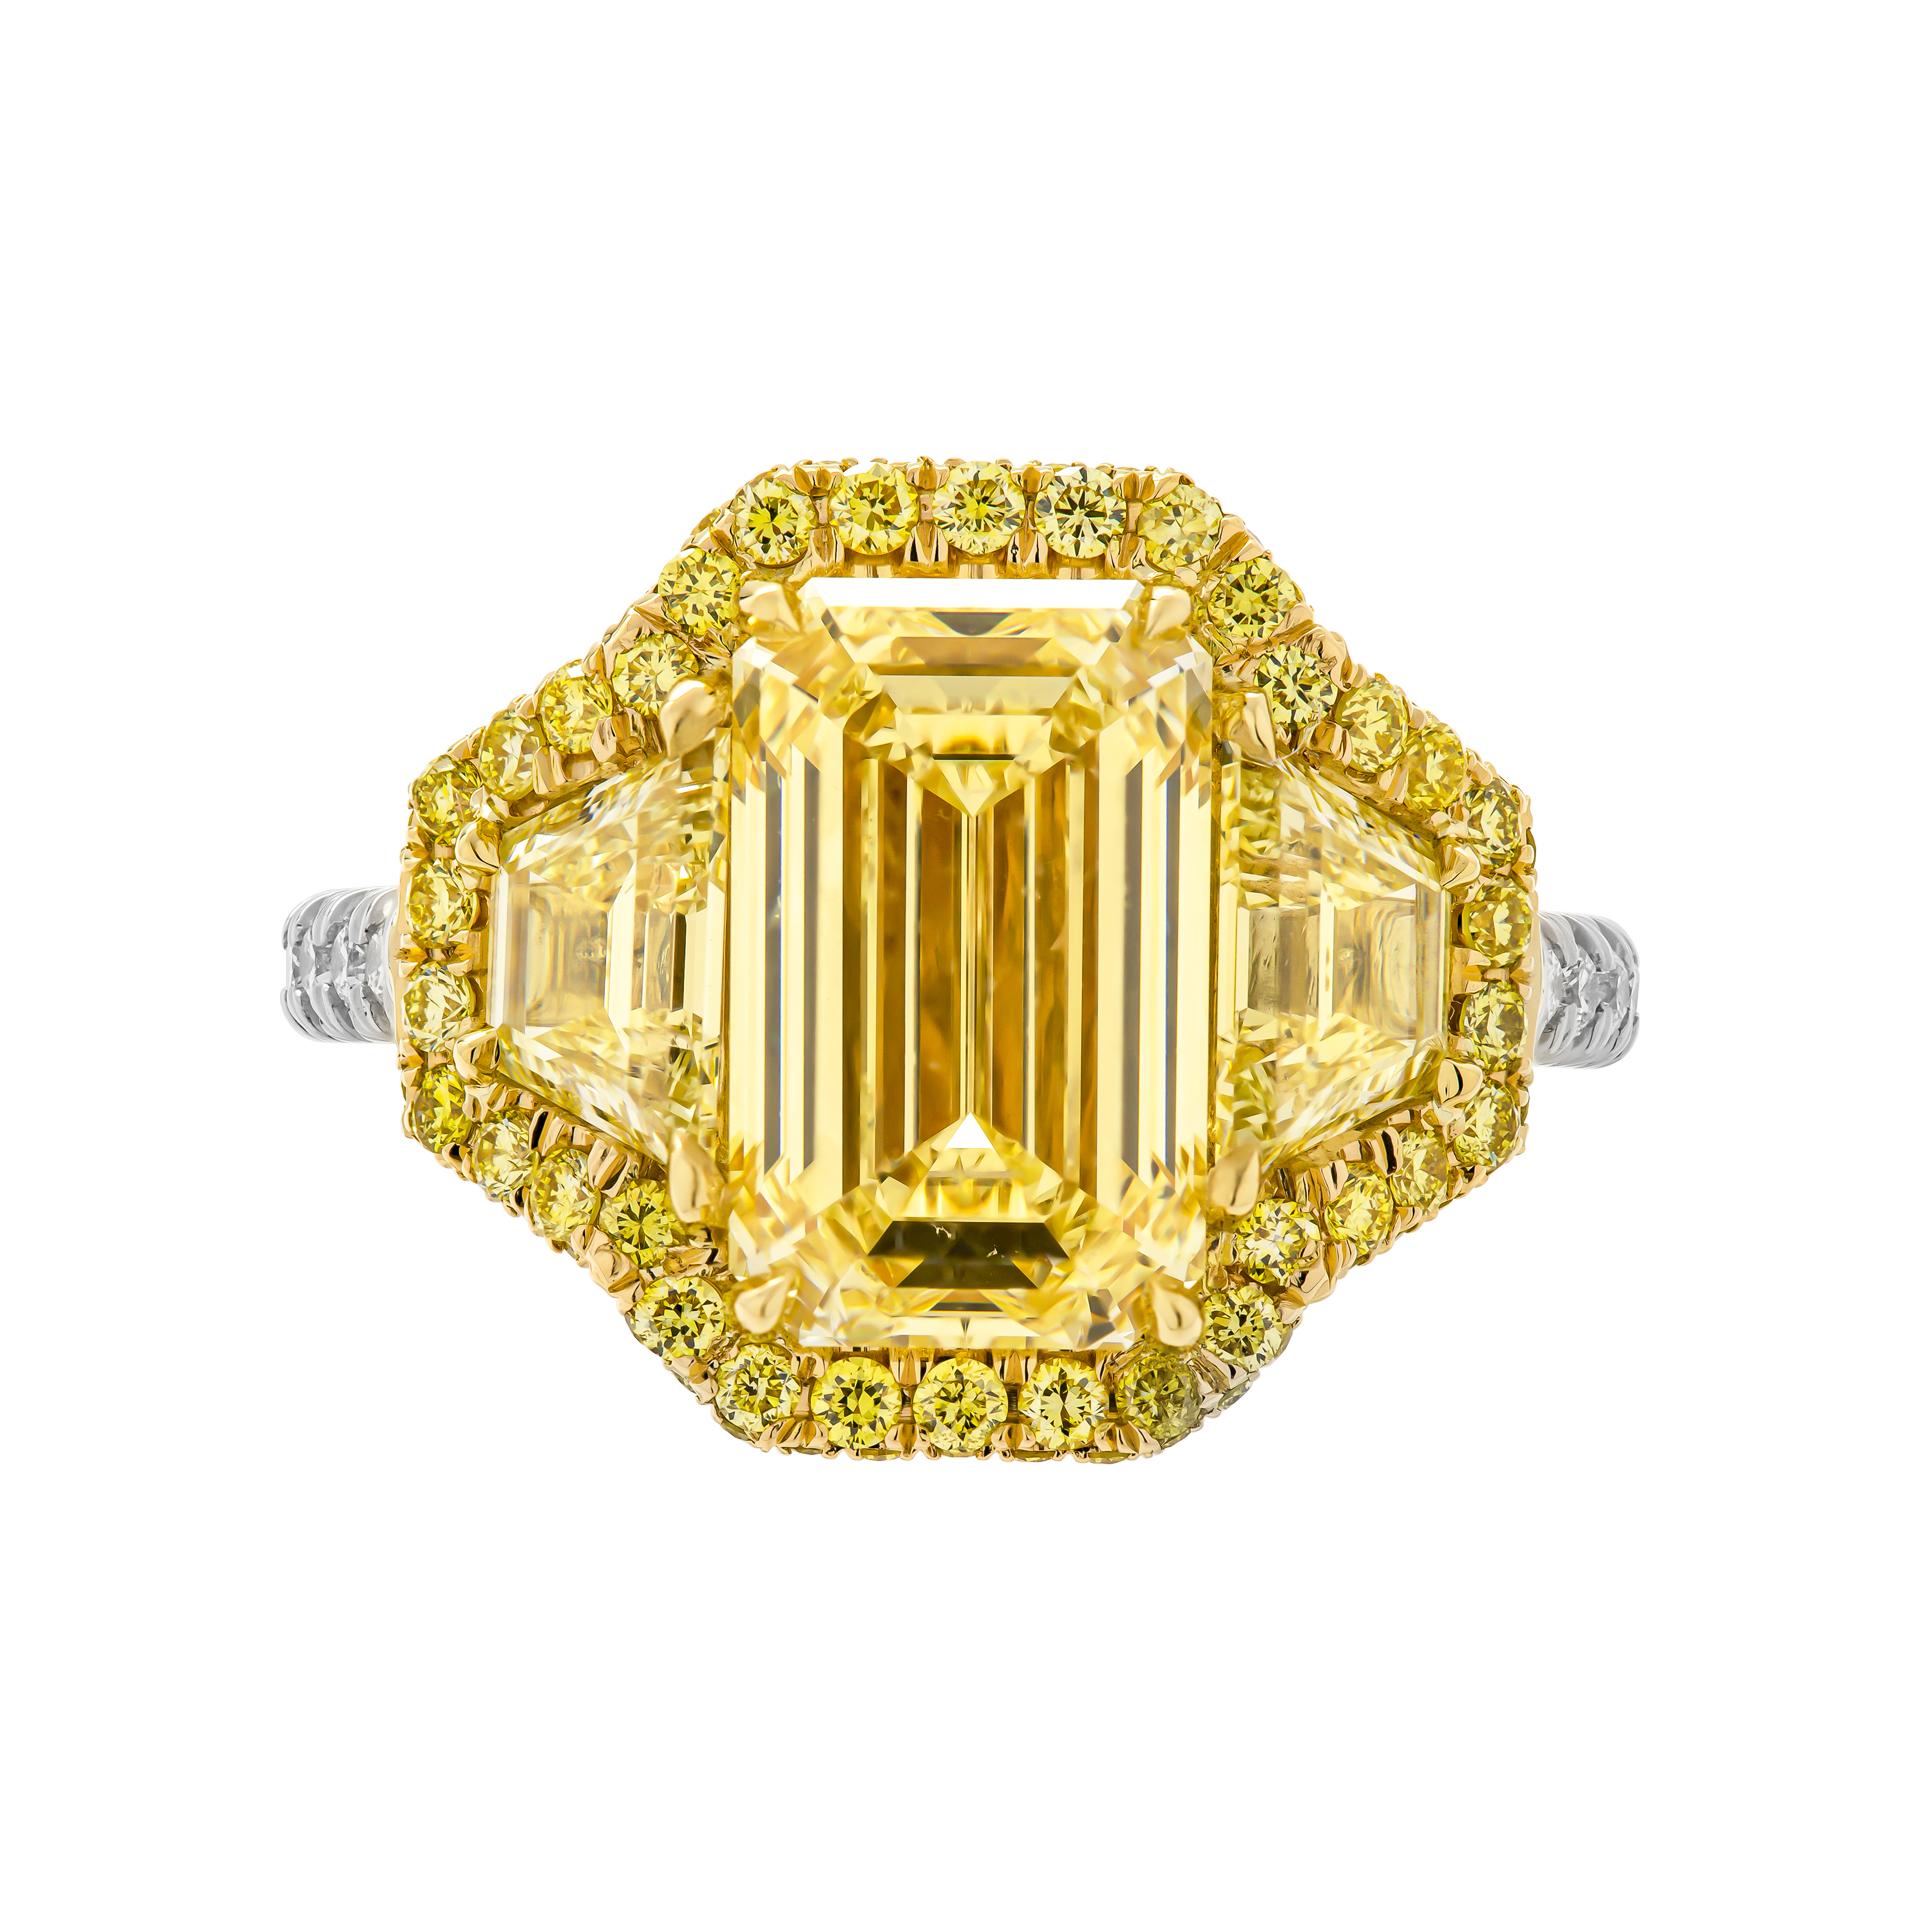 3 stone ring in Platinum & 18K Yellow Gold 
Center stone: 3.53ct W to X Range VVS1 Emerald Shape Diamond GIA#2215965991 
Side stones: 1.01ct Fancy Yellow VS trapezoids
Total carat weight of yellow pave: 0.65ct 
Total carat weight of white pave: